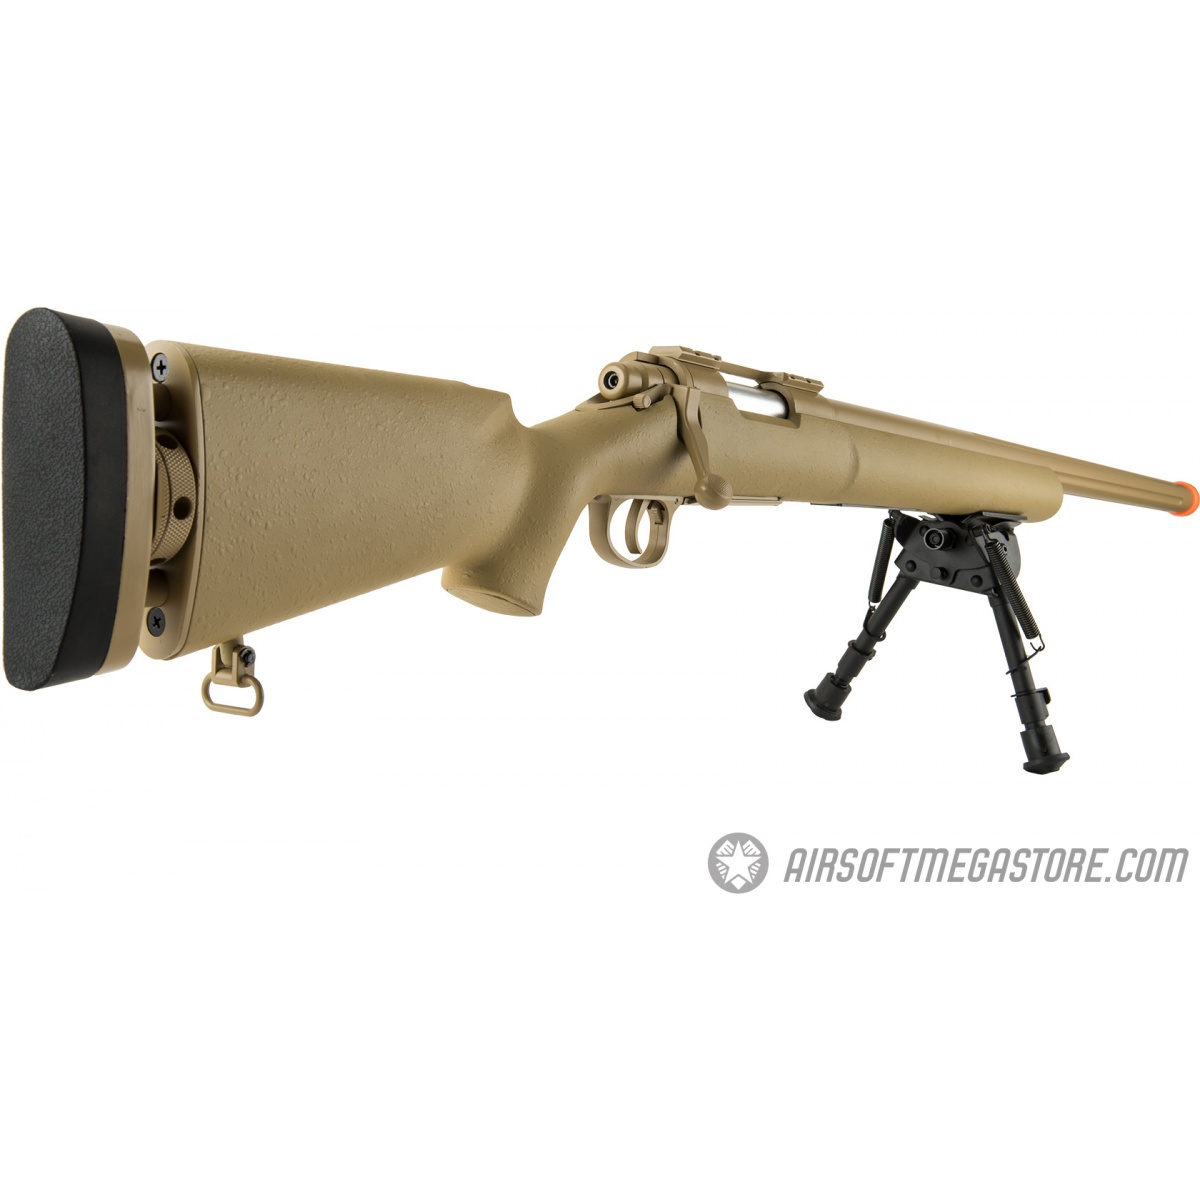 Echo1 M28 Bolt Action Sniper Rifle w/ Bipod TAN Airsoft Megastore